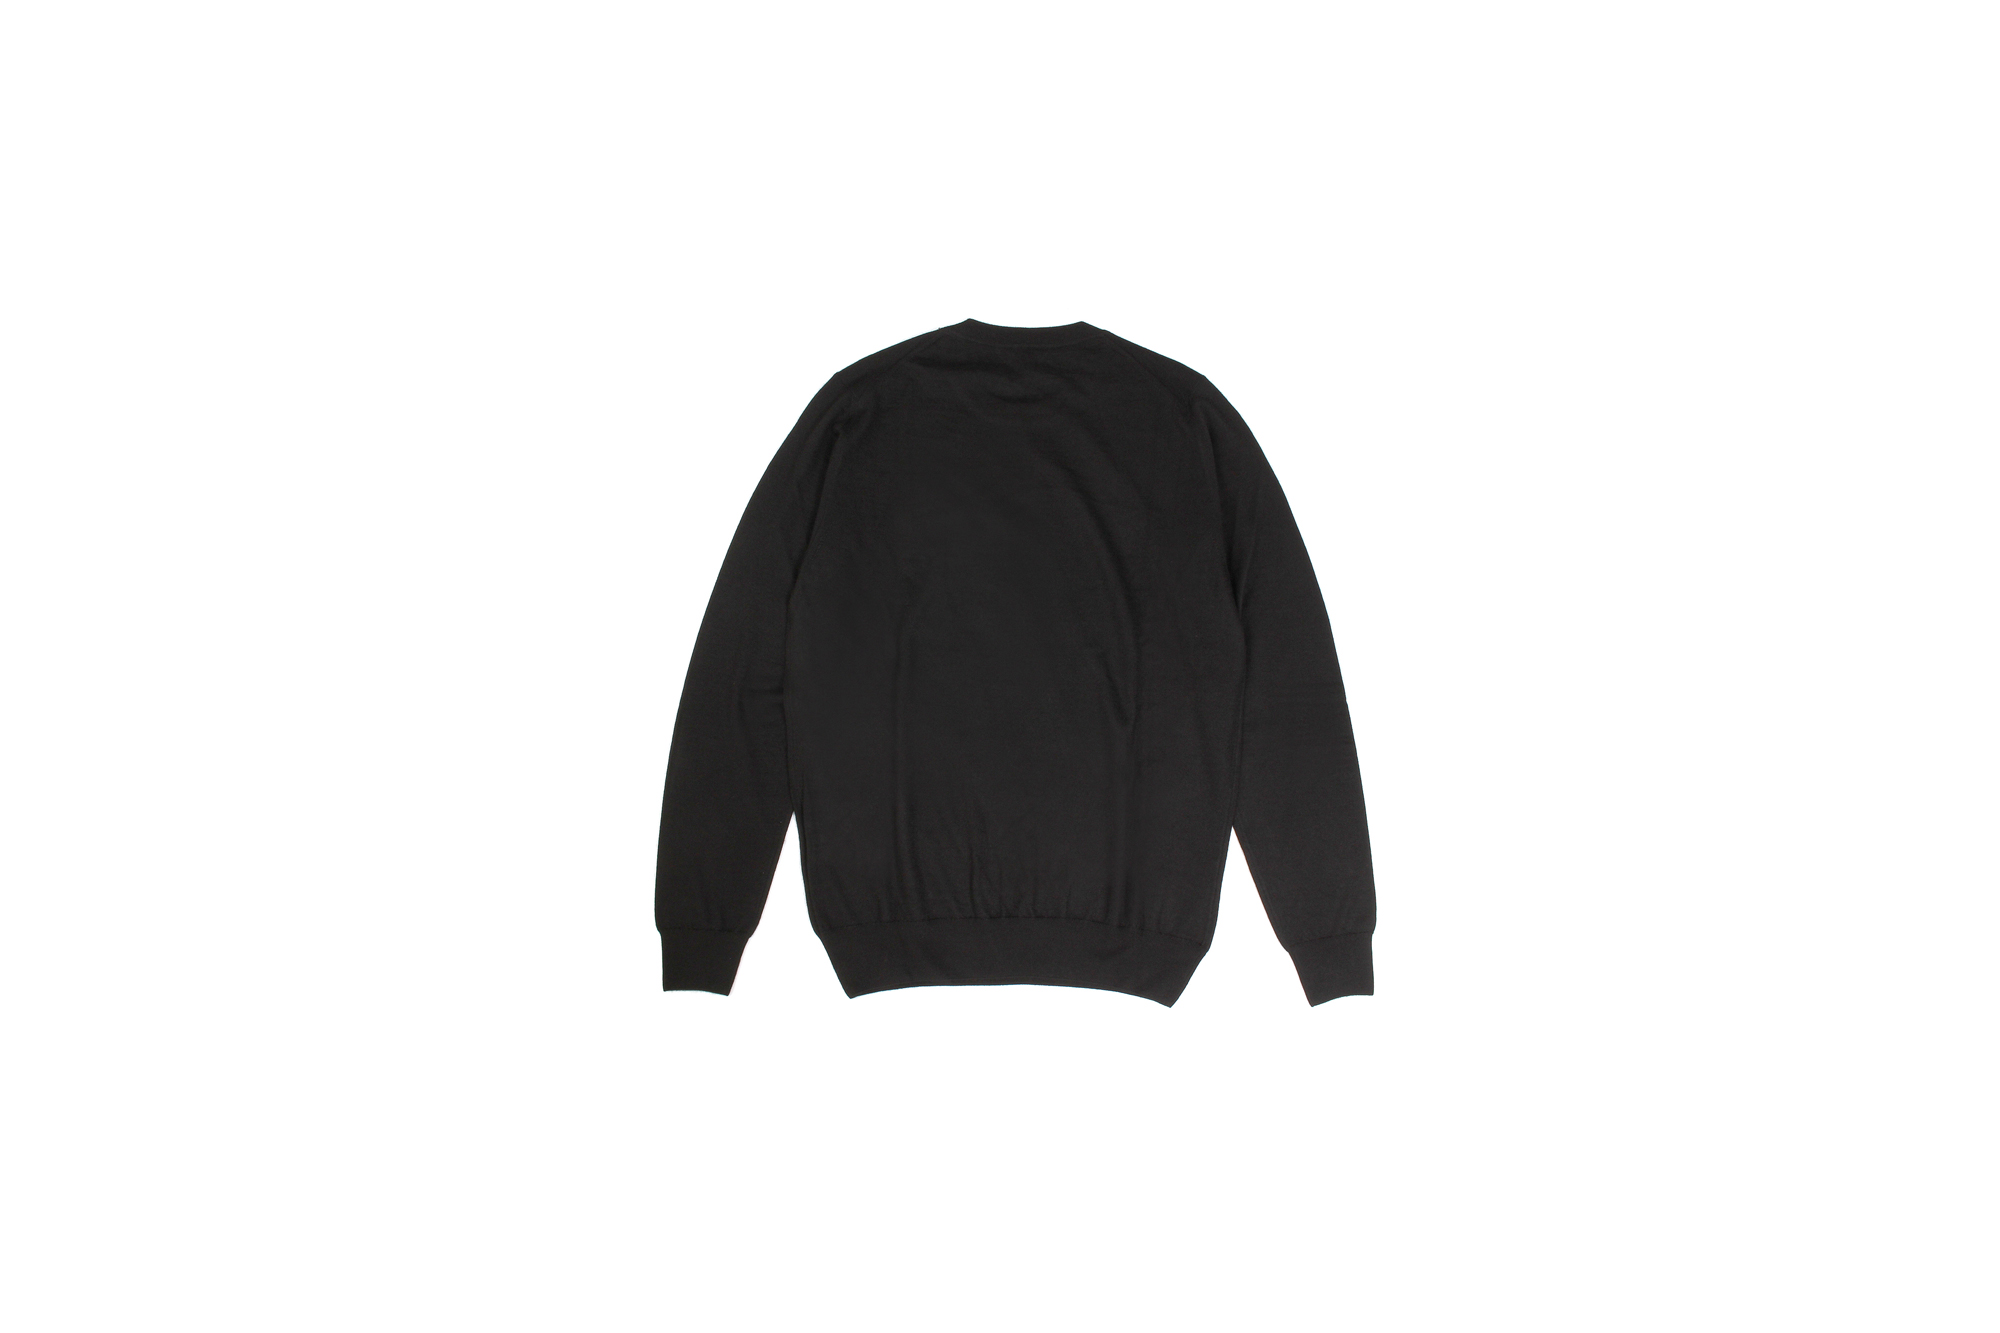 FEDELI (フェデリ) Silk Cashmere Crew Neck Sweater シルクカシミア クルーネック セーター BLACK (ブラック・9)made in italy (イタリア製) 2021 秋冬新作 【入荷しました】【フリー分発売開始】愛知 名古屋 Alto e Diritto altoediritto アルトエデリット シルカシニット